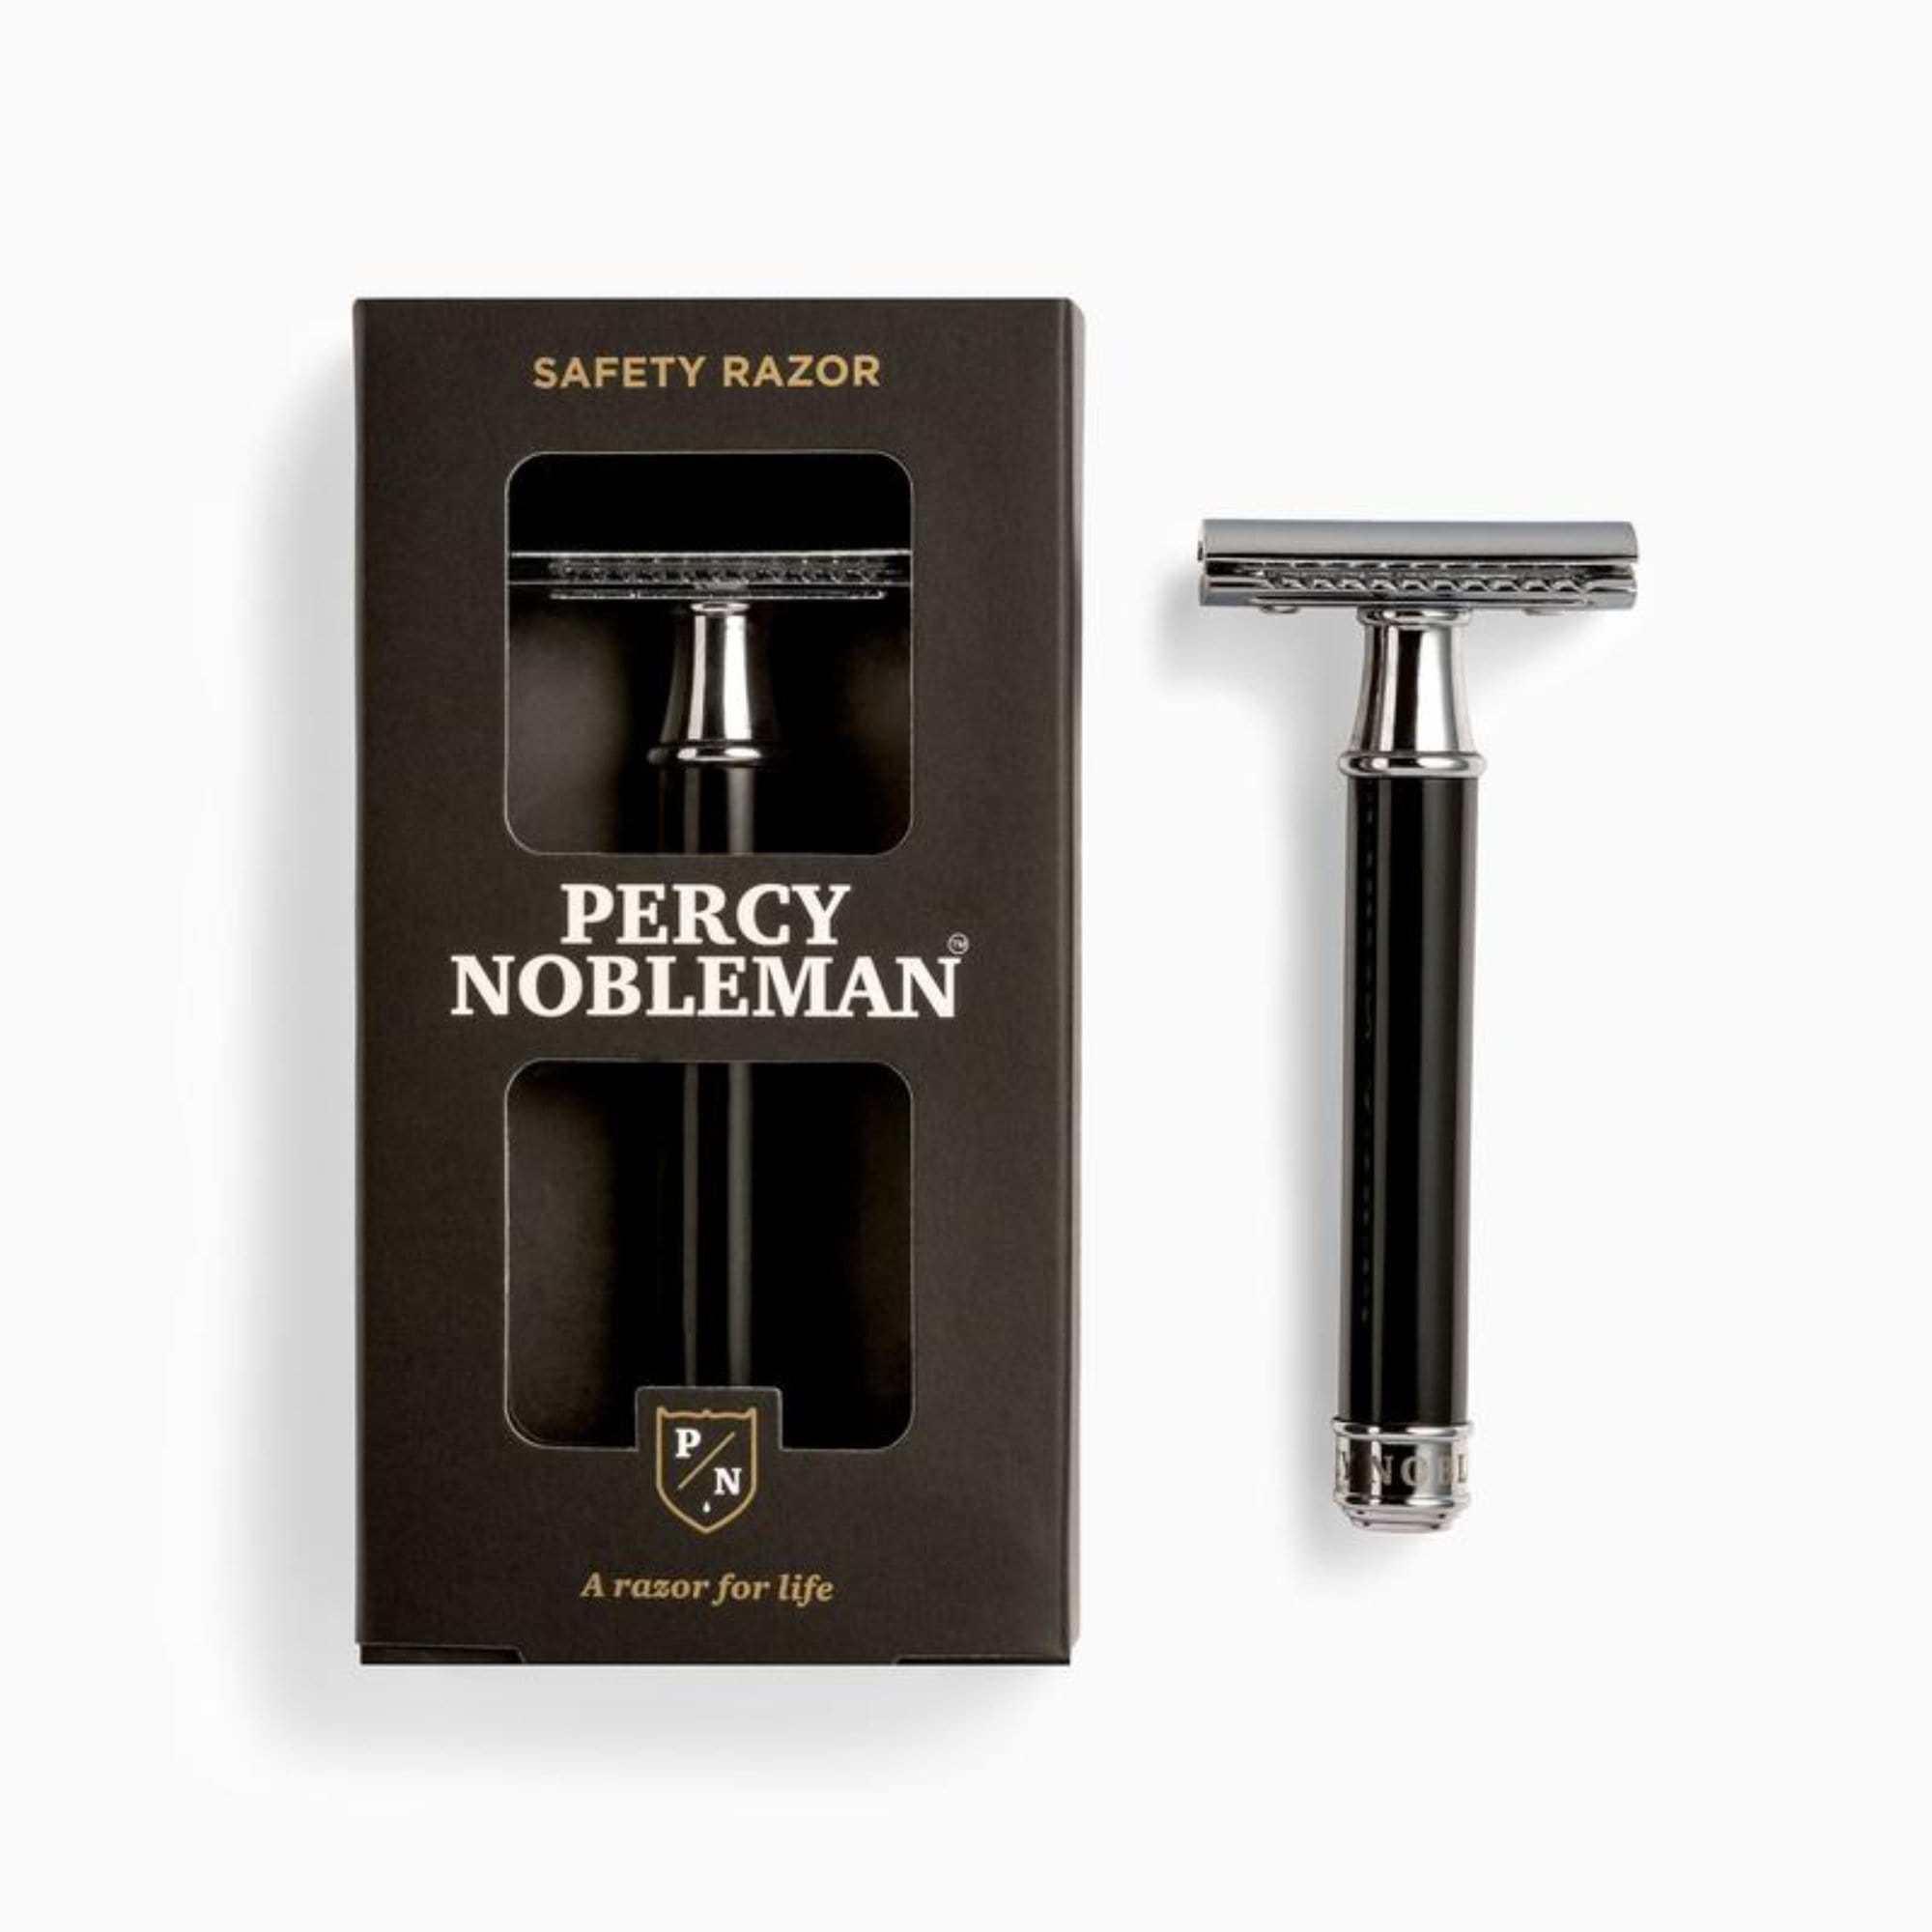 Percy Nobleman Perfume One Size Safety Razor